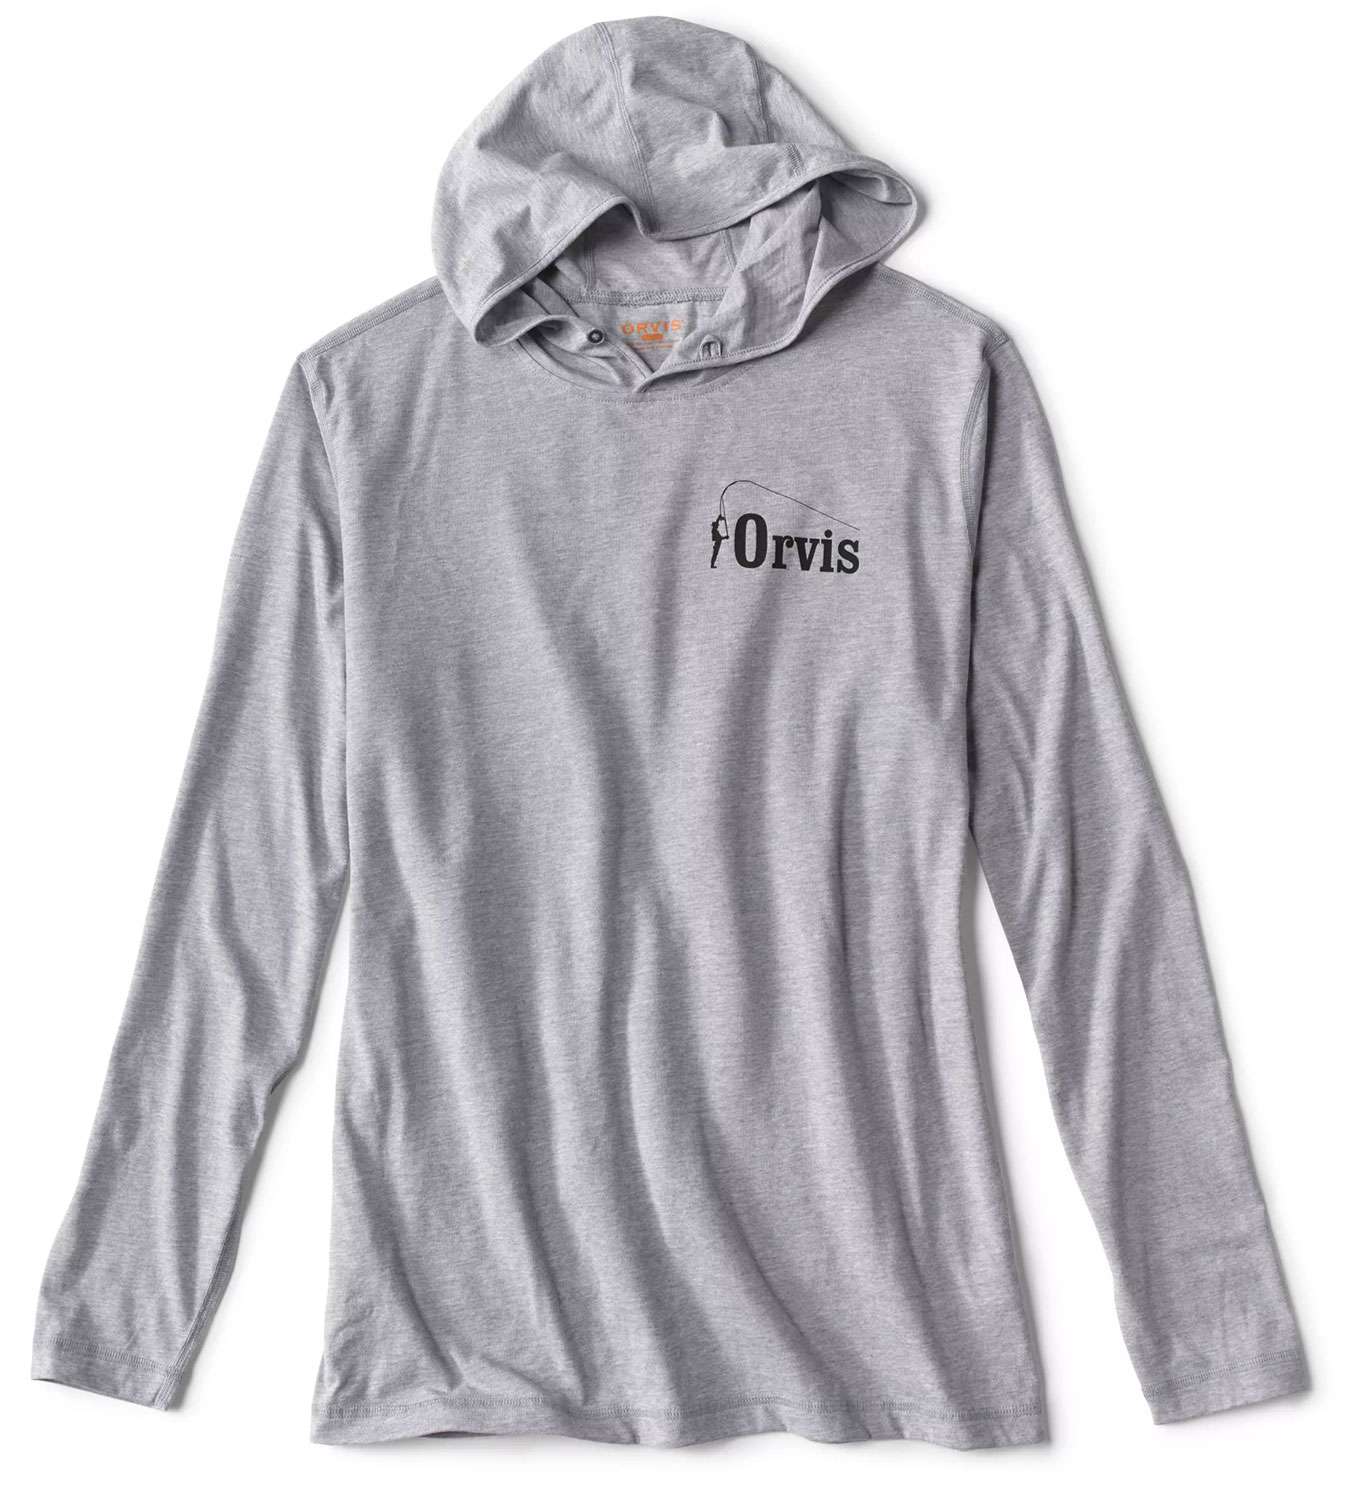 Orvis Logo drirelease Hoodie - Skyline - Large